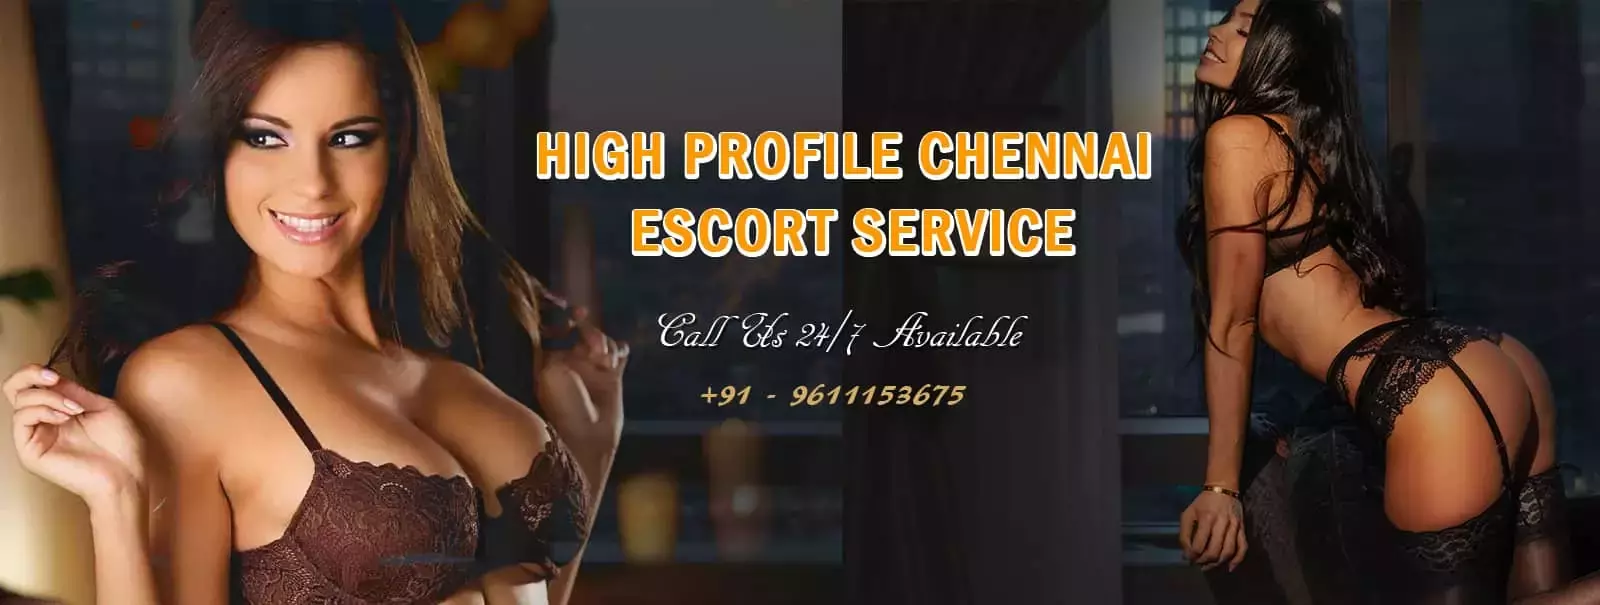 High profile chennai escorts services